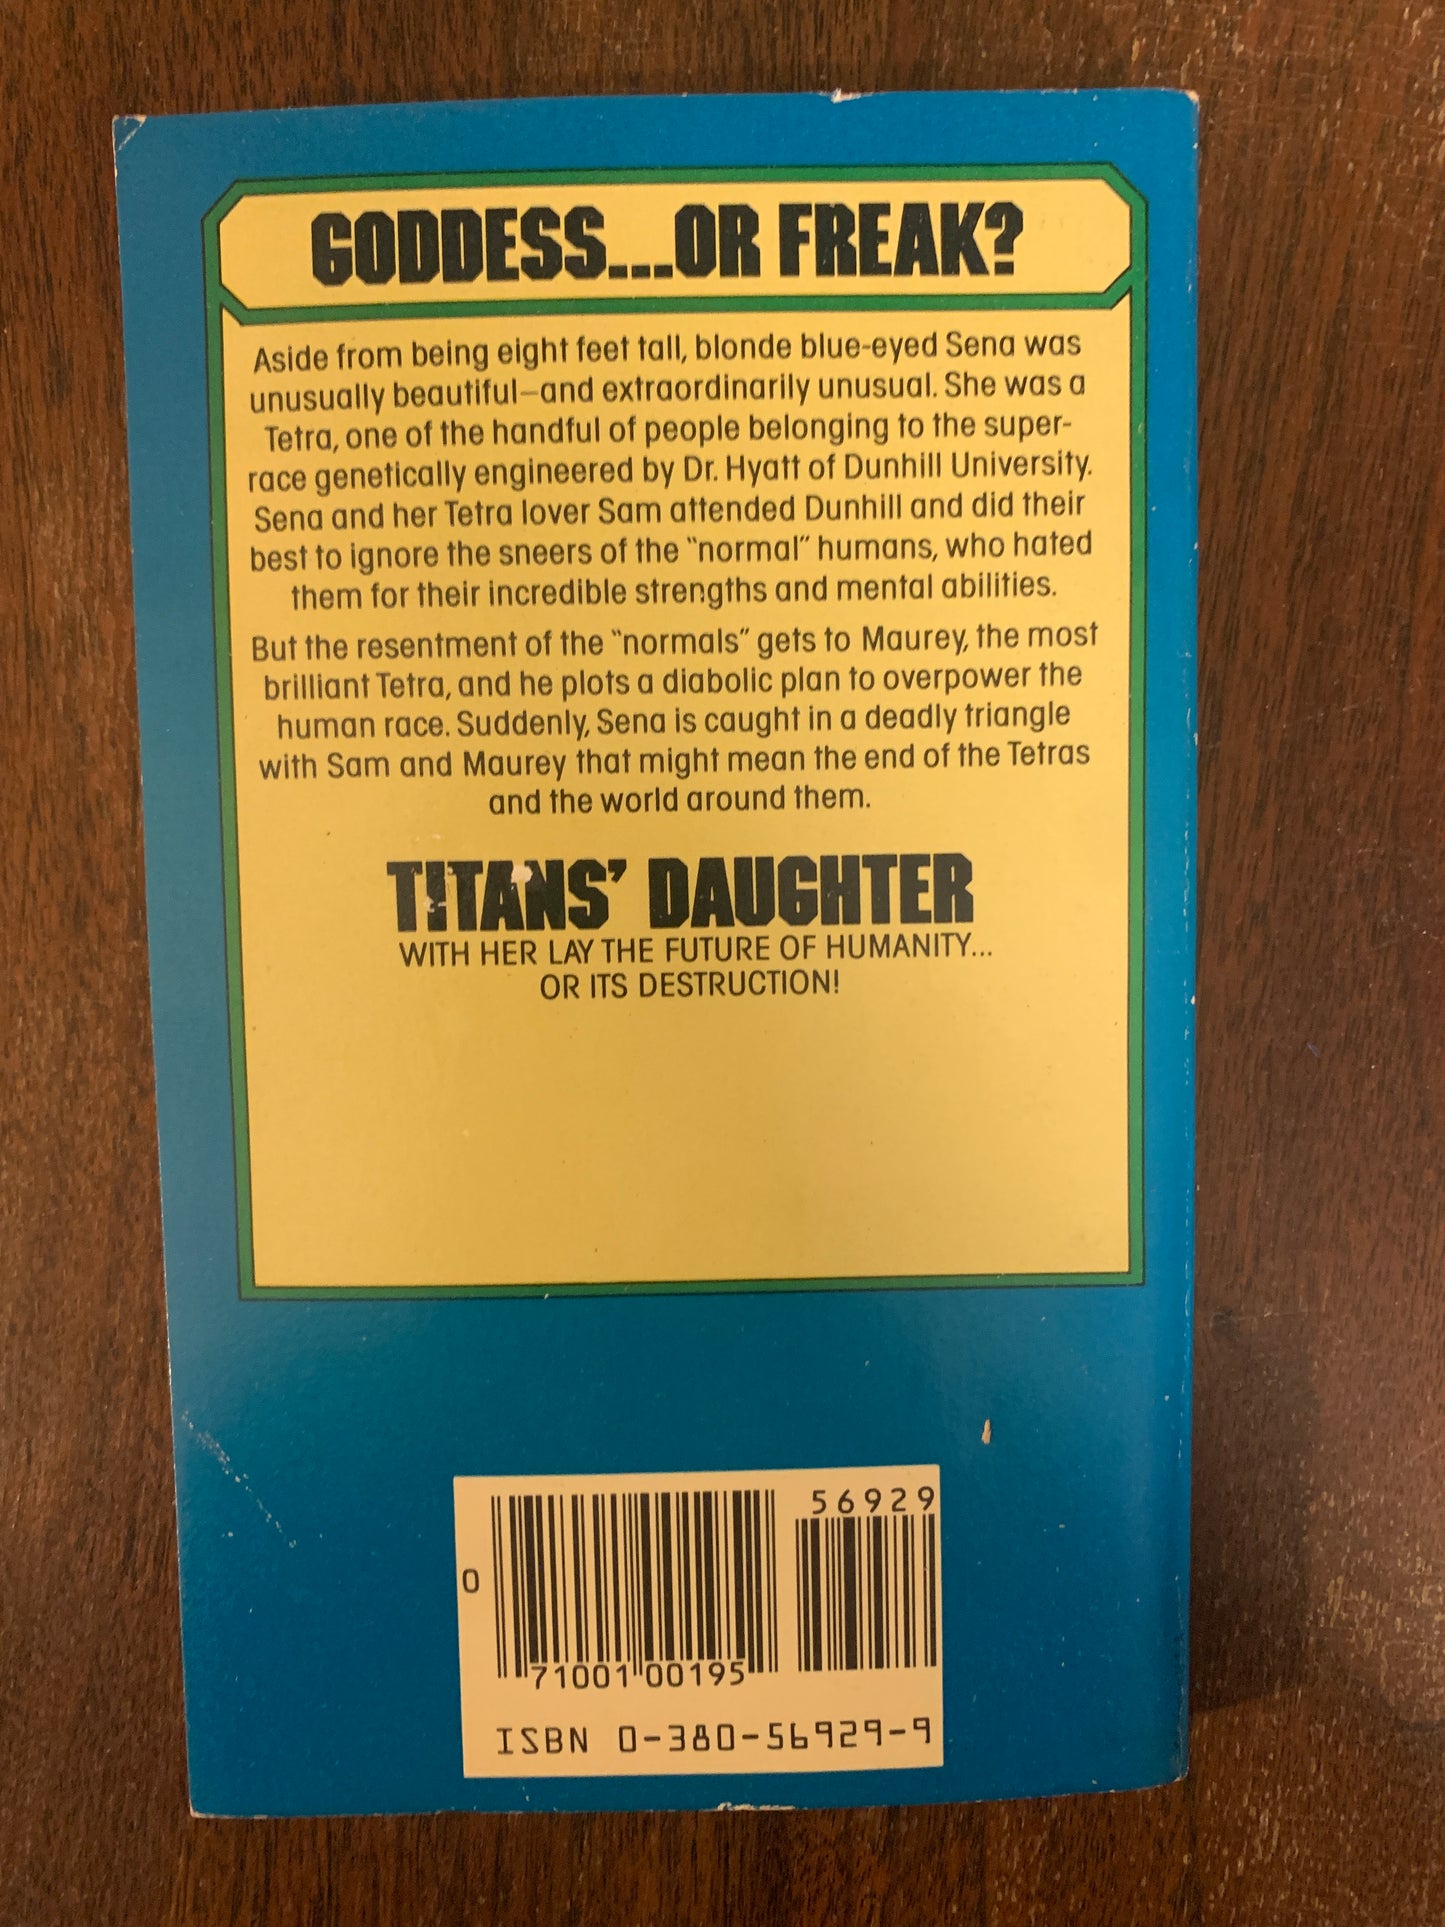 Titans' Daughter by James Blish, Avon 1st Print 1981